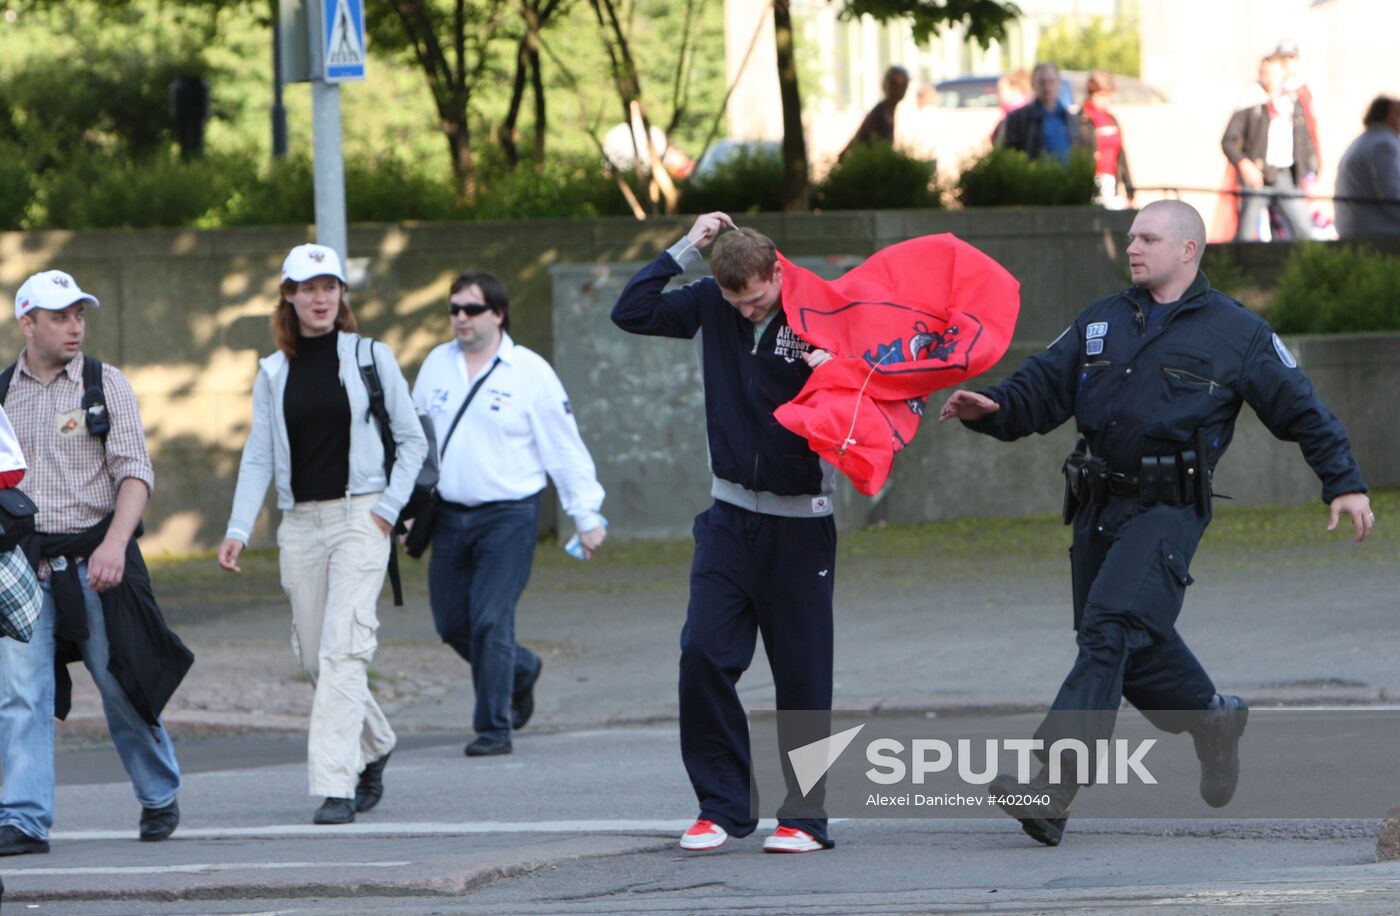 Russian fans and law enforcement personnel